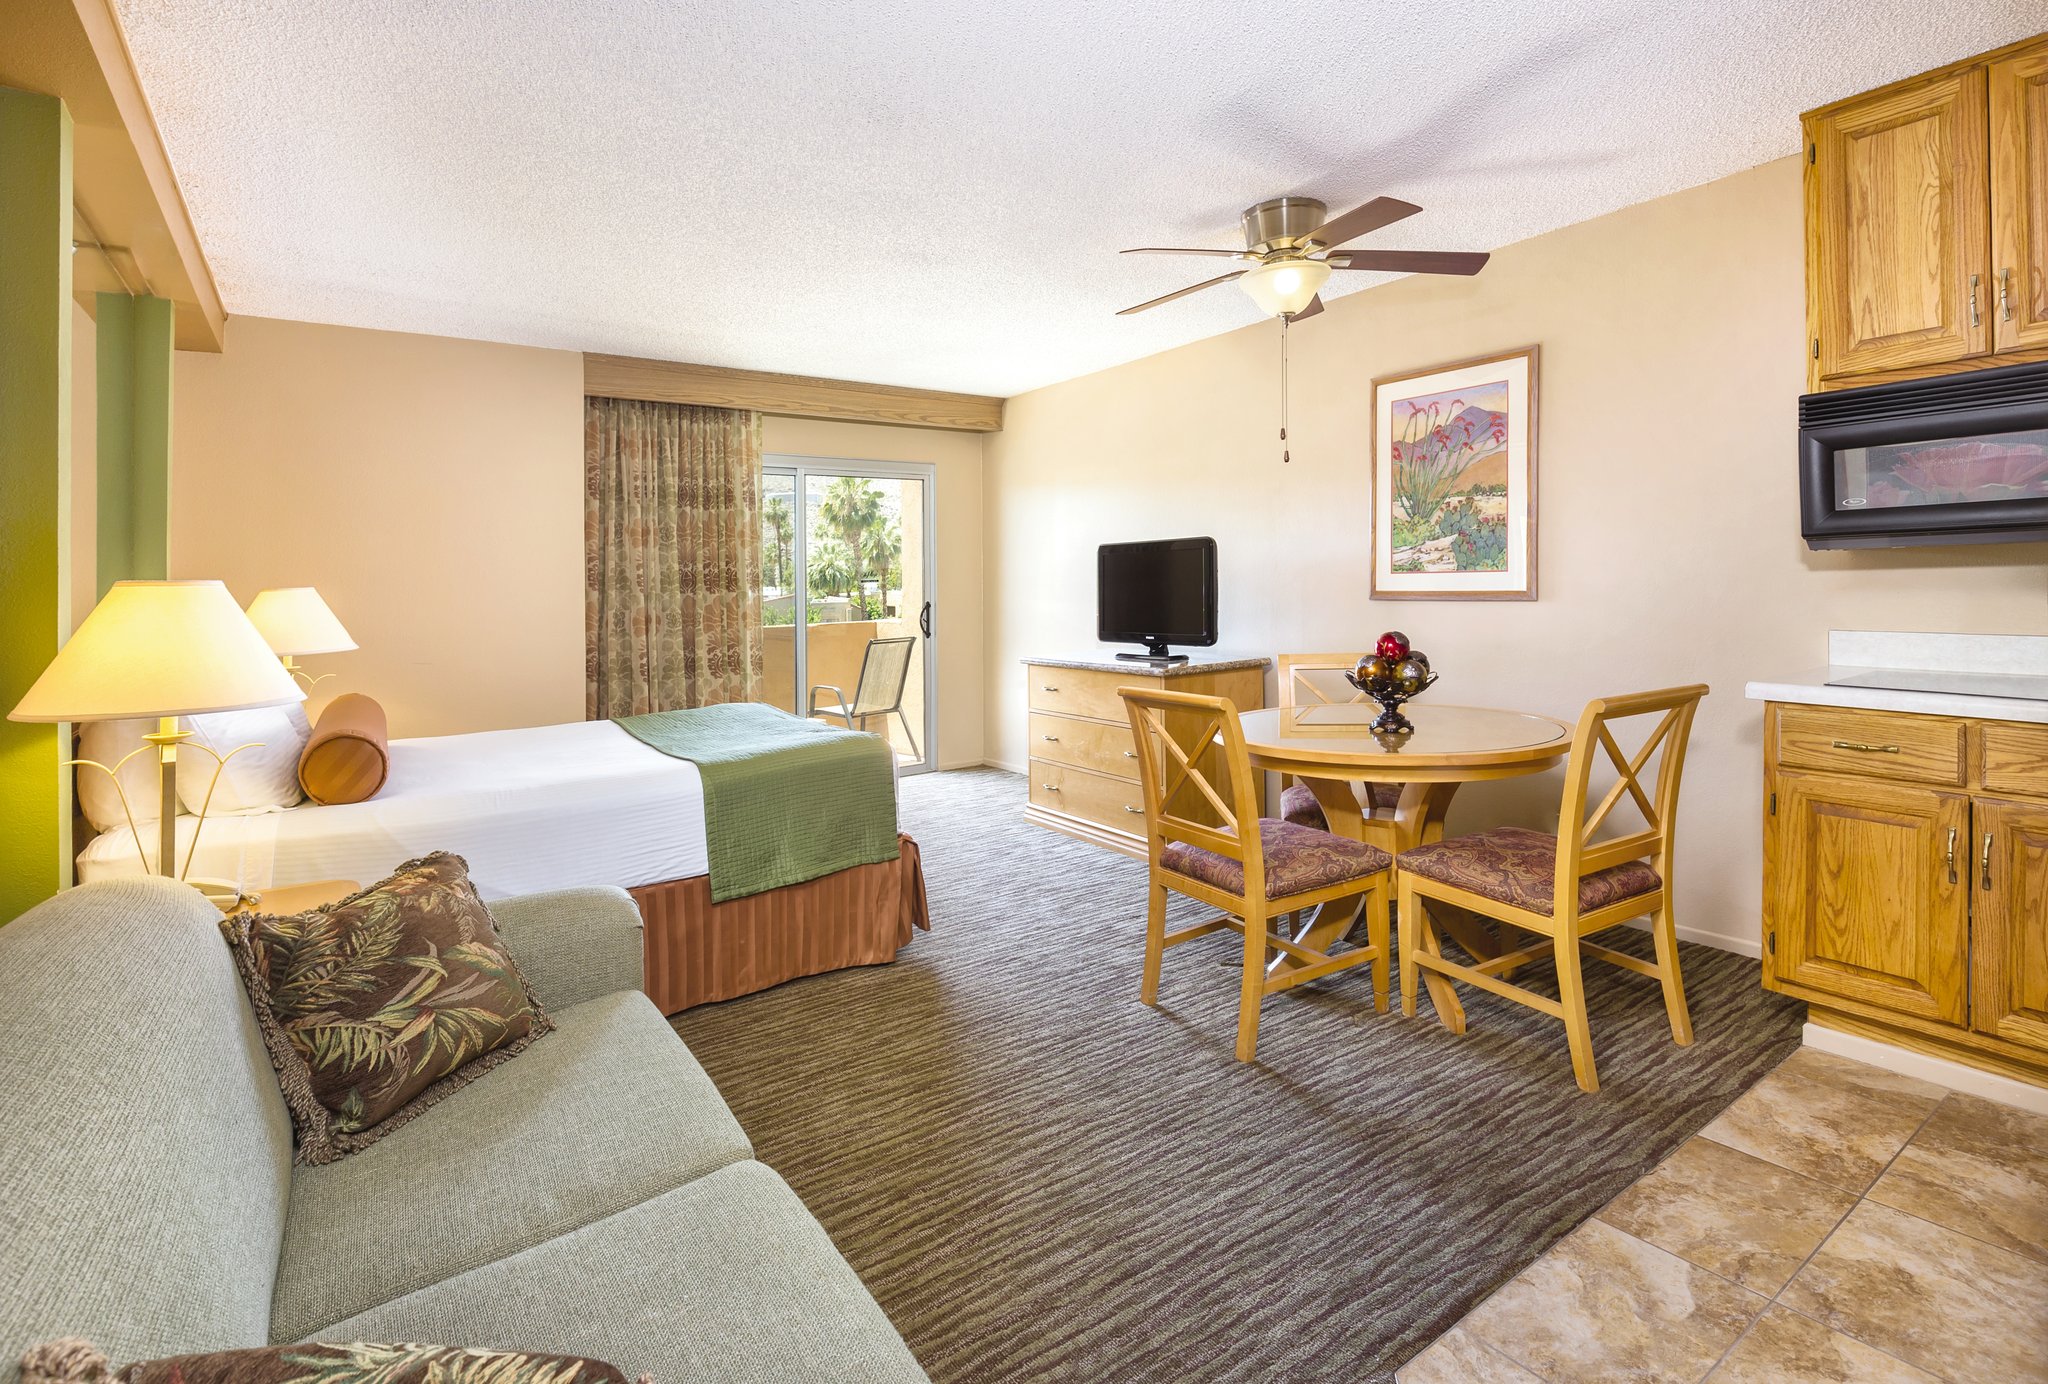 WorldMark Palm Springs - Plaza Resort and Spa